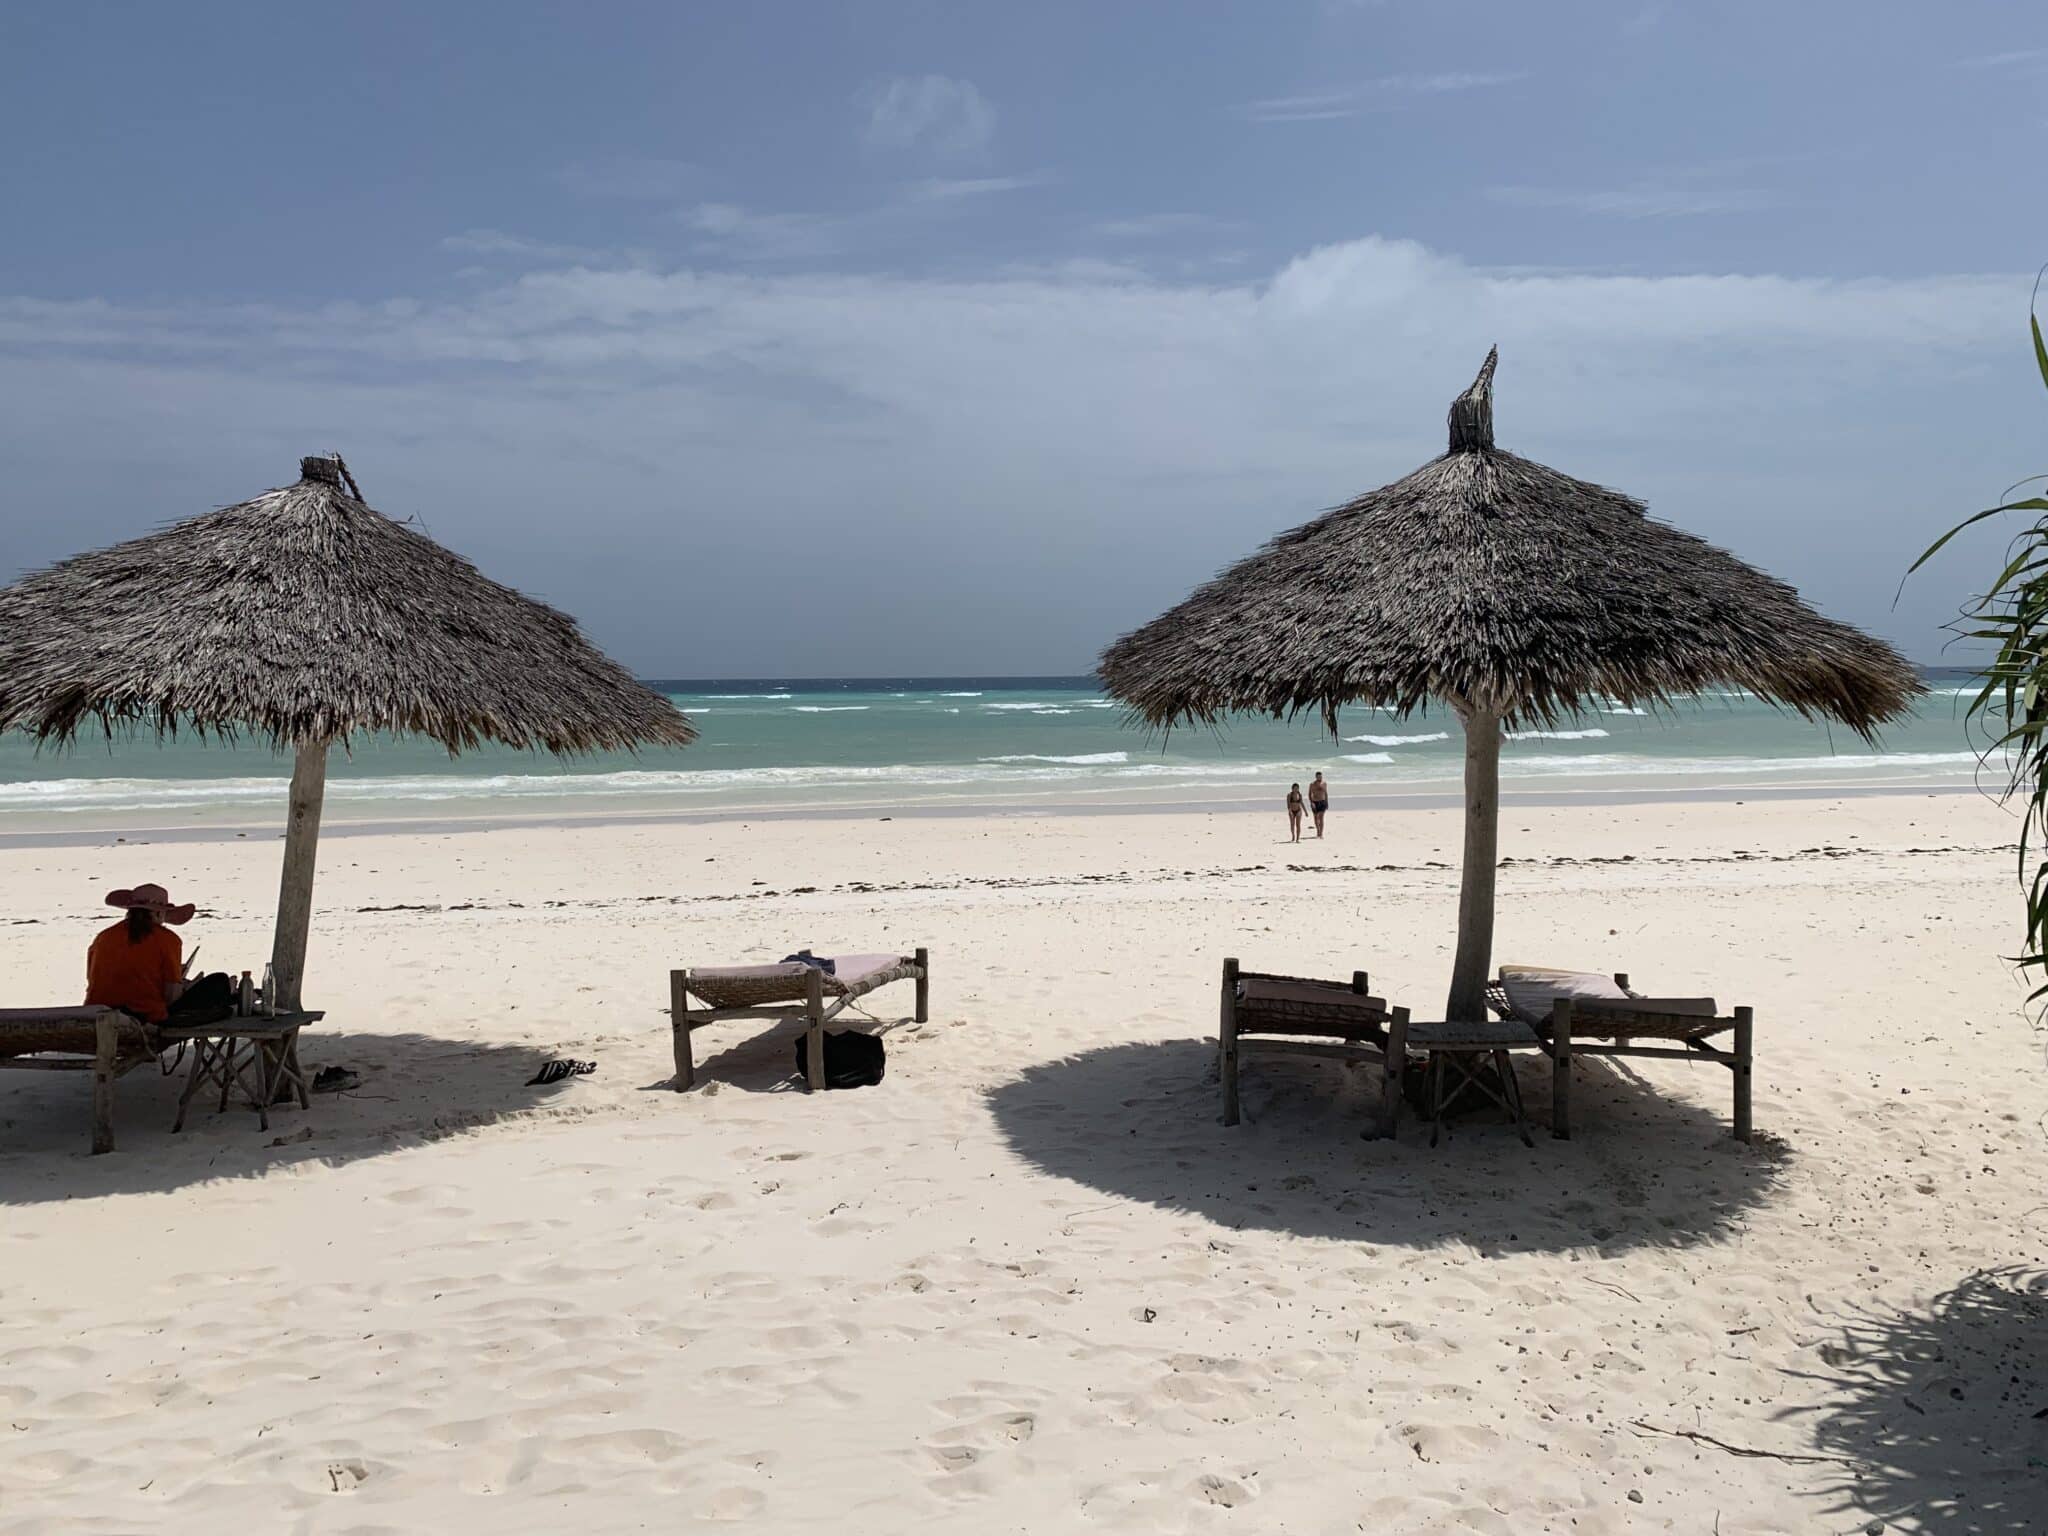 Zanzibar rejseguide - de bedste oplevelser og yogatips til Zanzibar